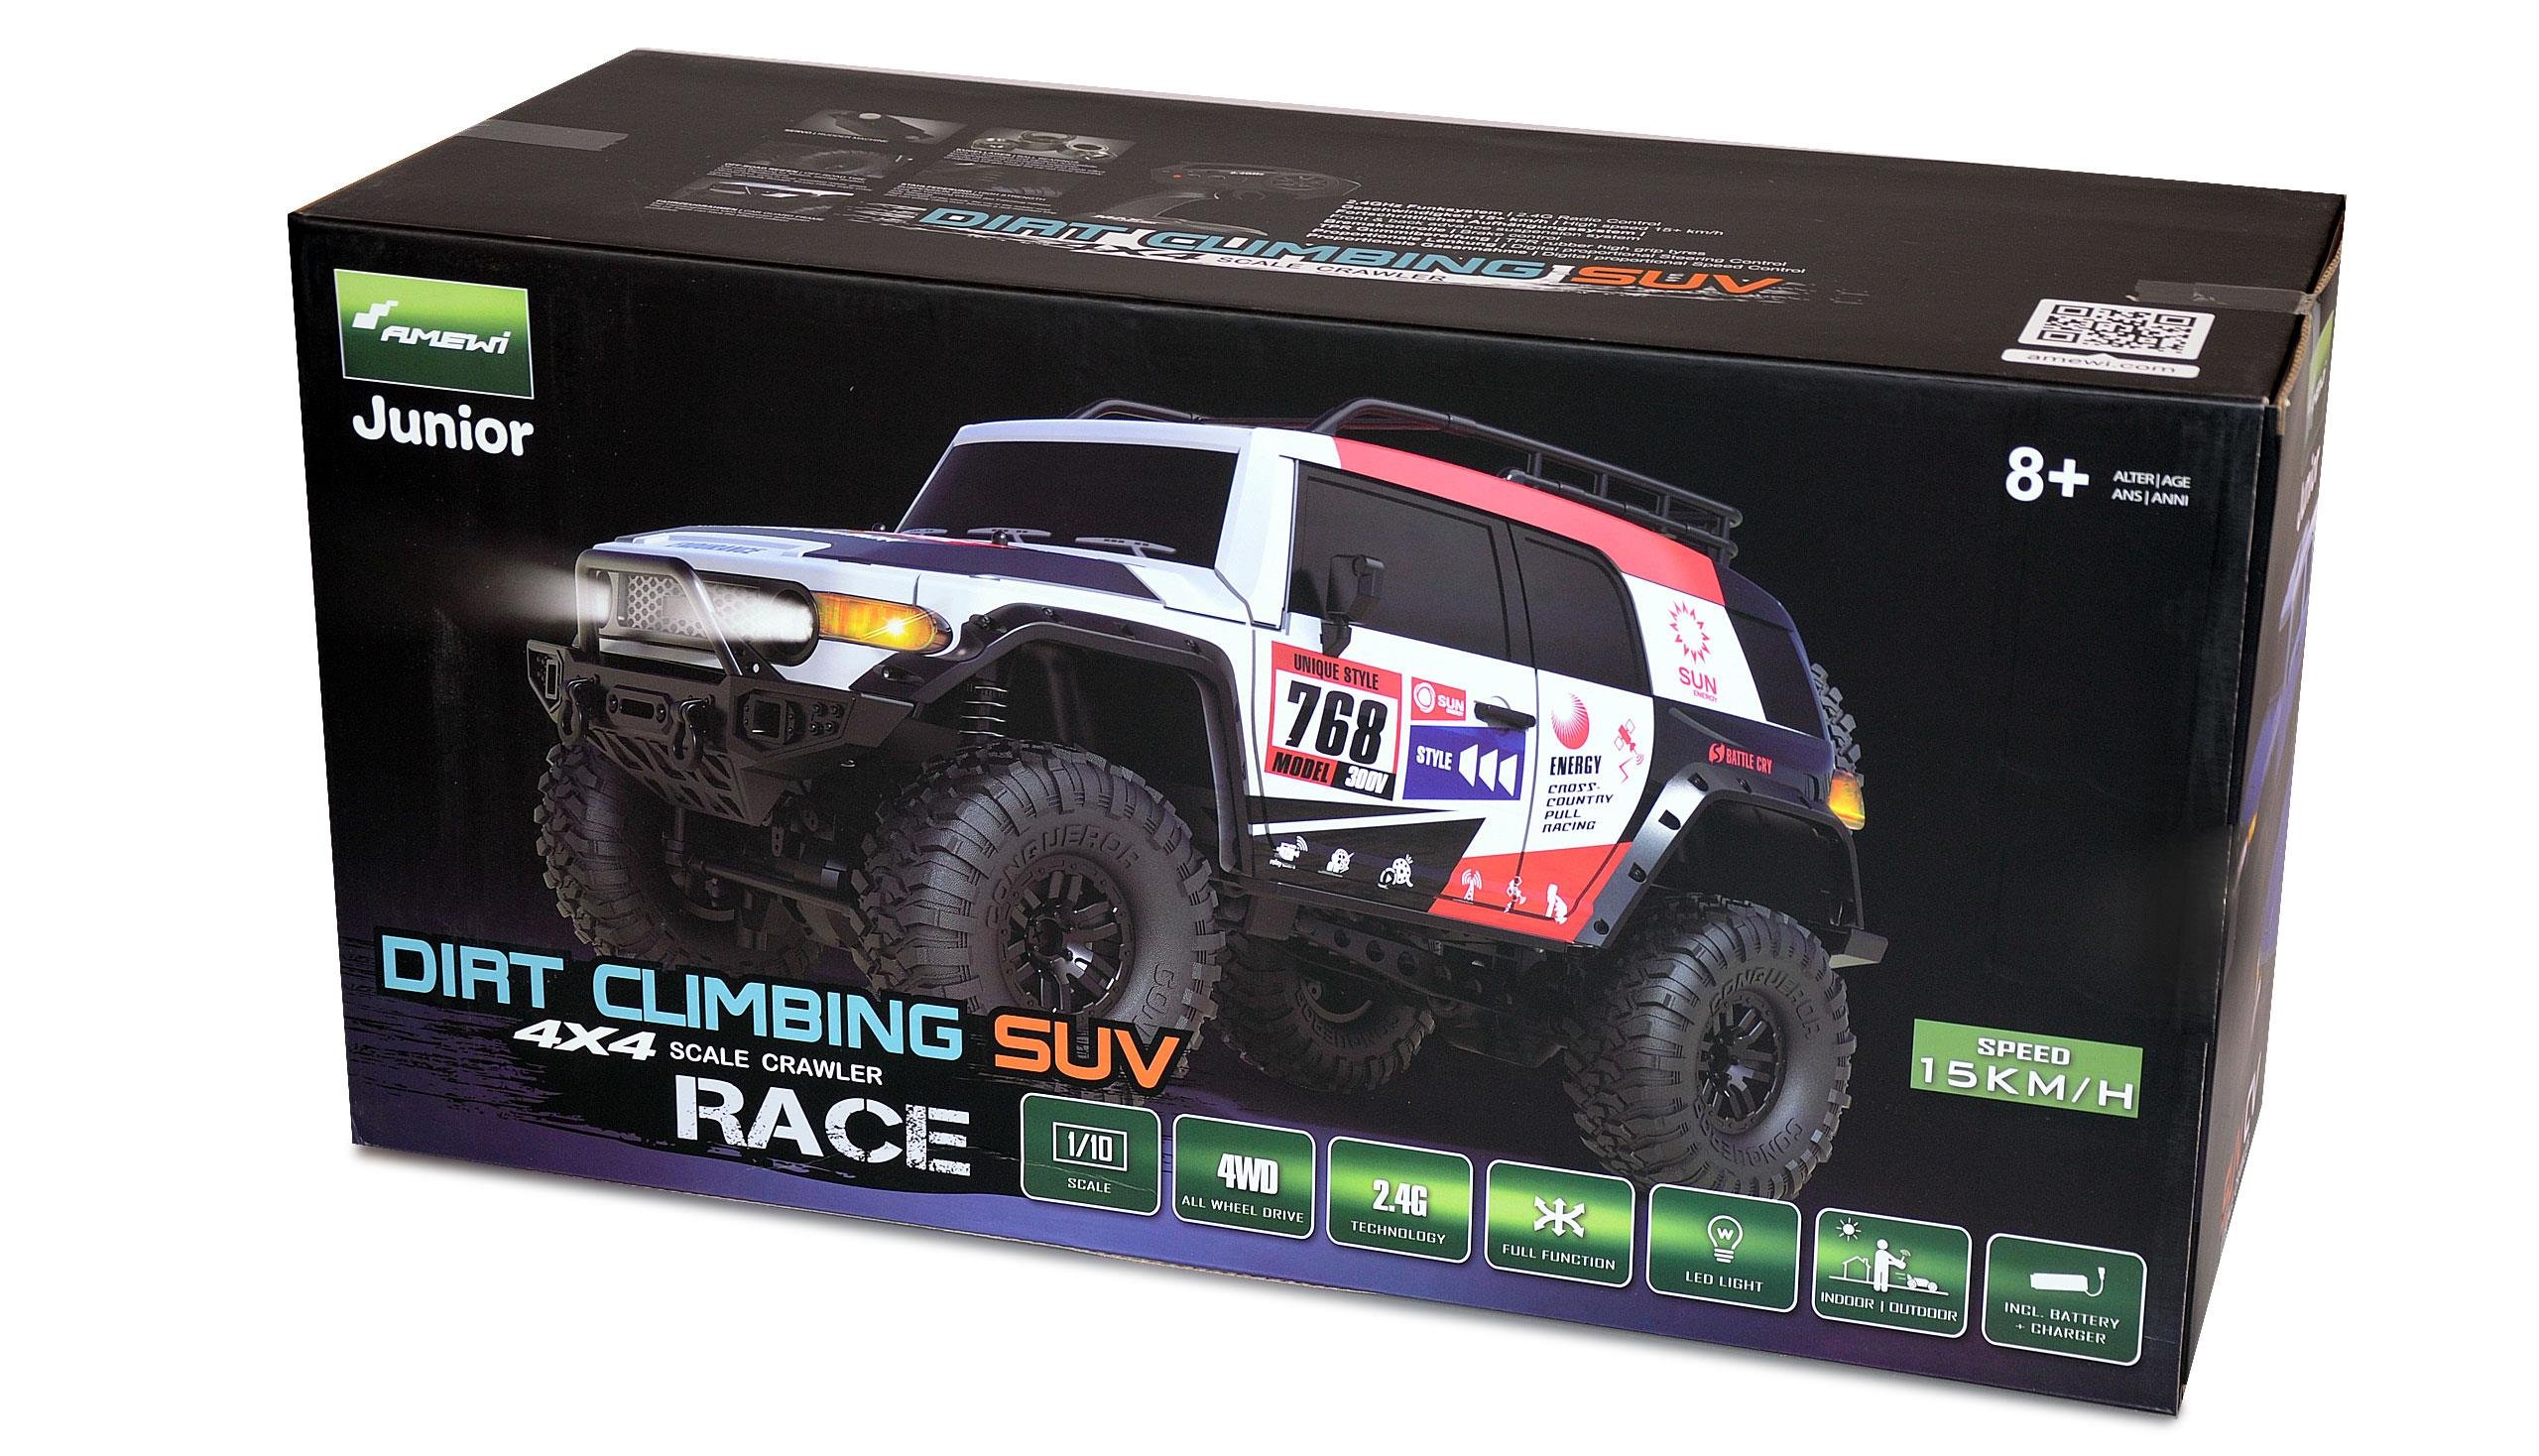 Dirt Climbing SUV Race Crawler 4WD 1:10 RTR weiß/rot, 159,90 €